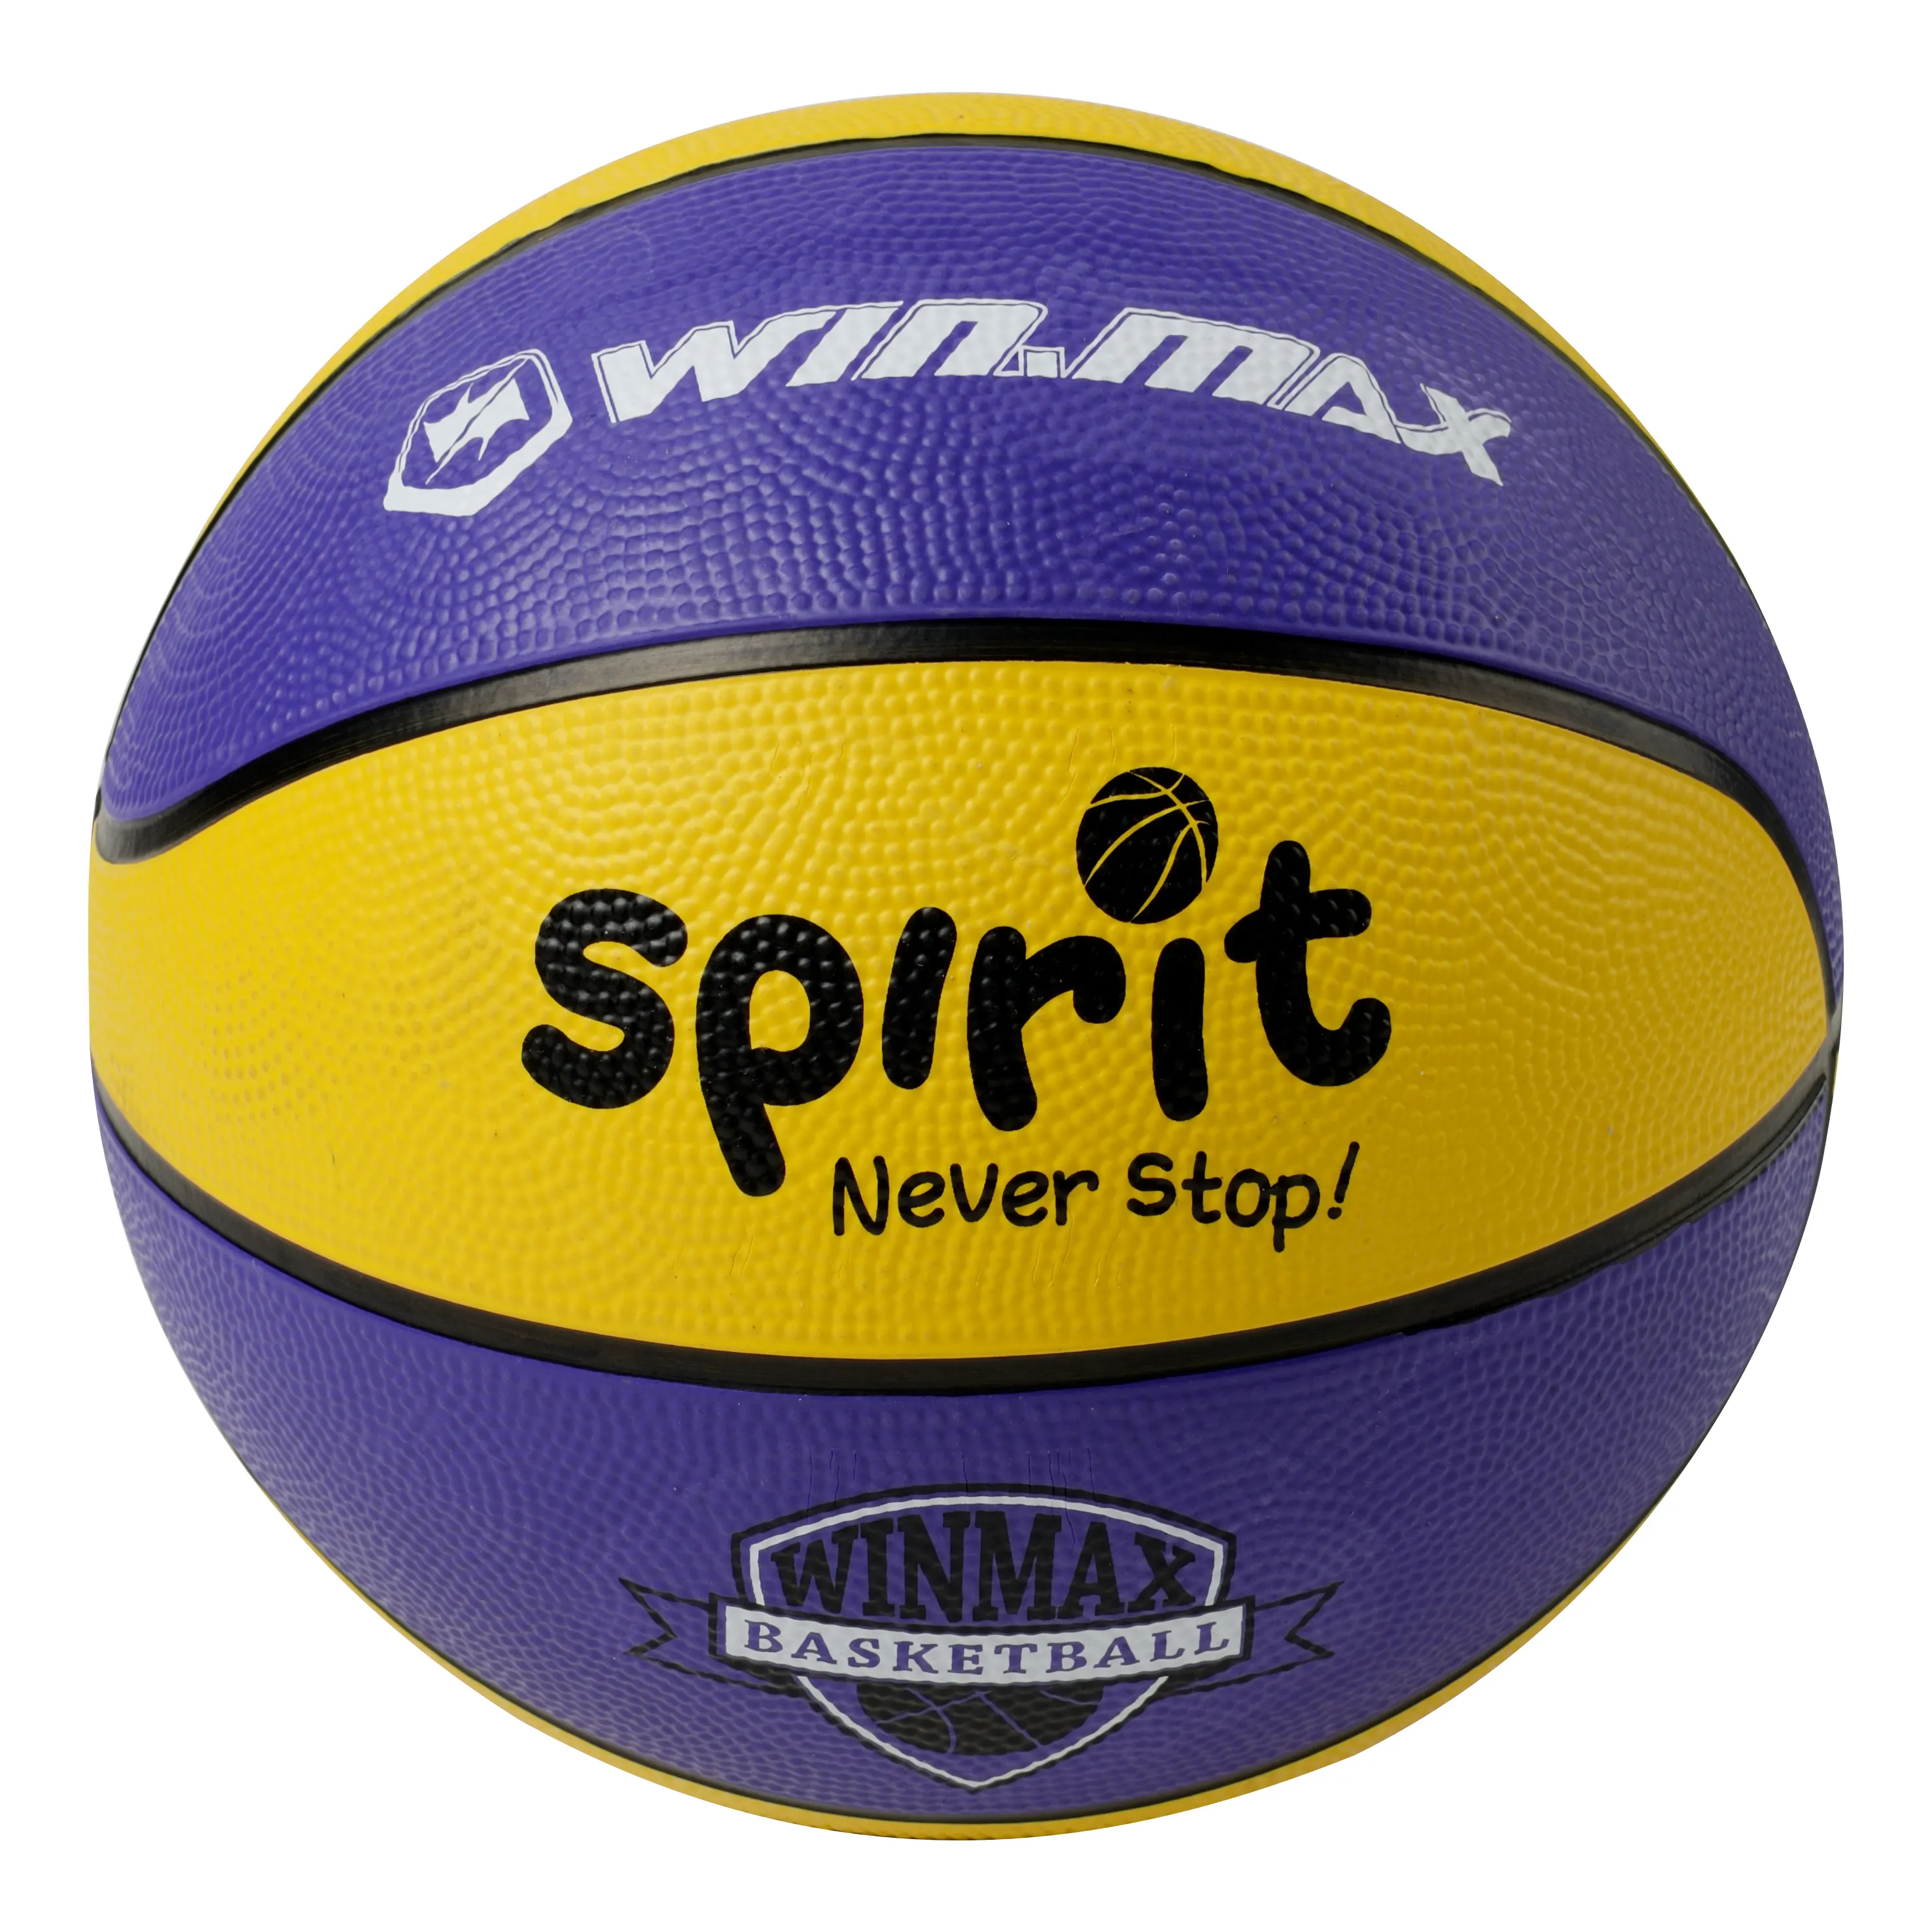 Yeni varış WMY90011 basketbol ucuz fiyat kauçuk basketbol topu topu boyutu 3